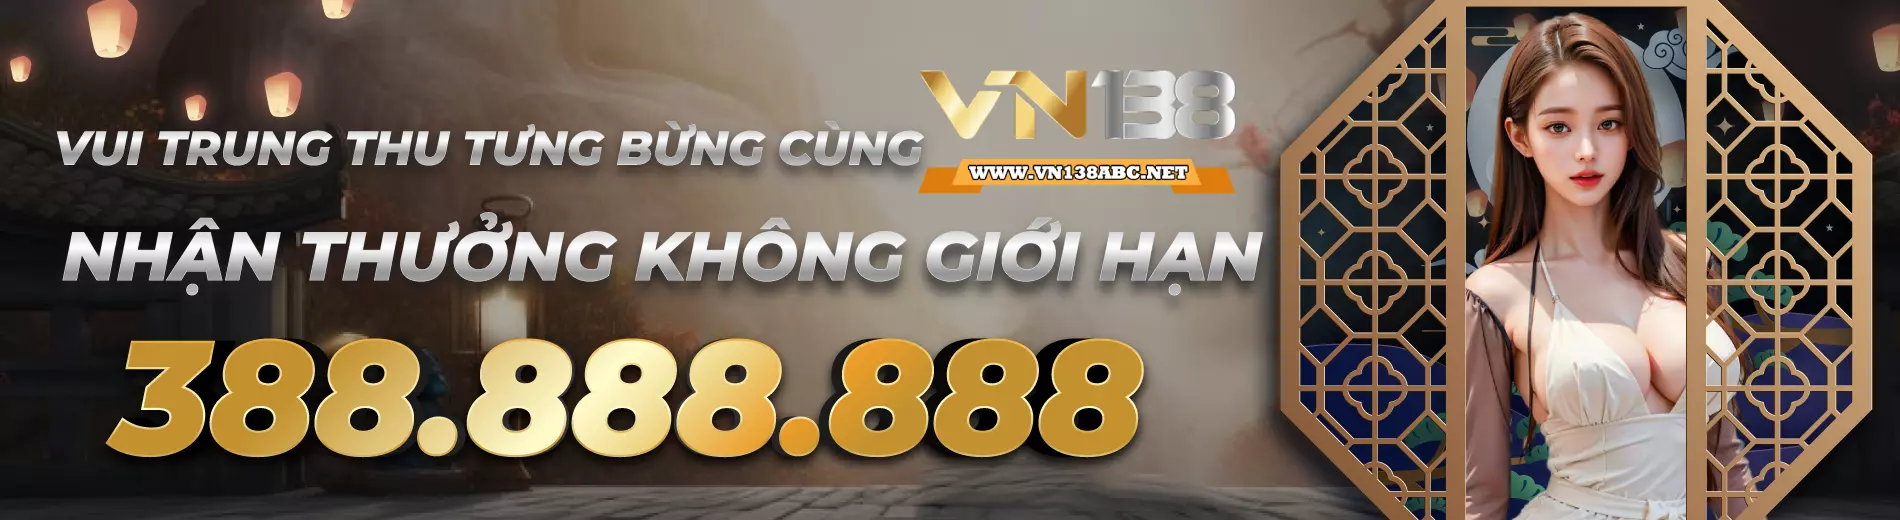 banner-vn138